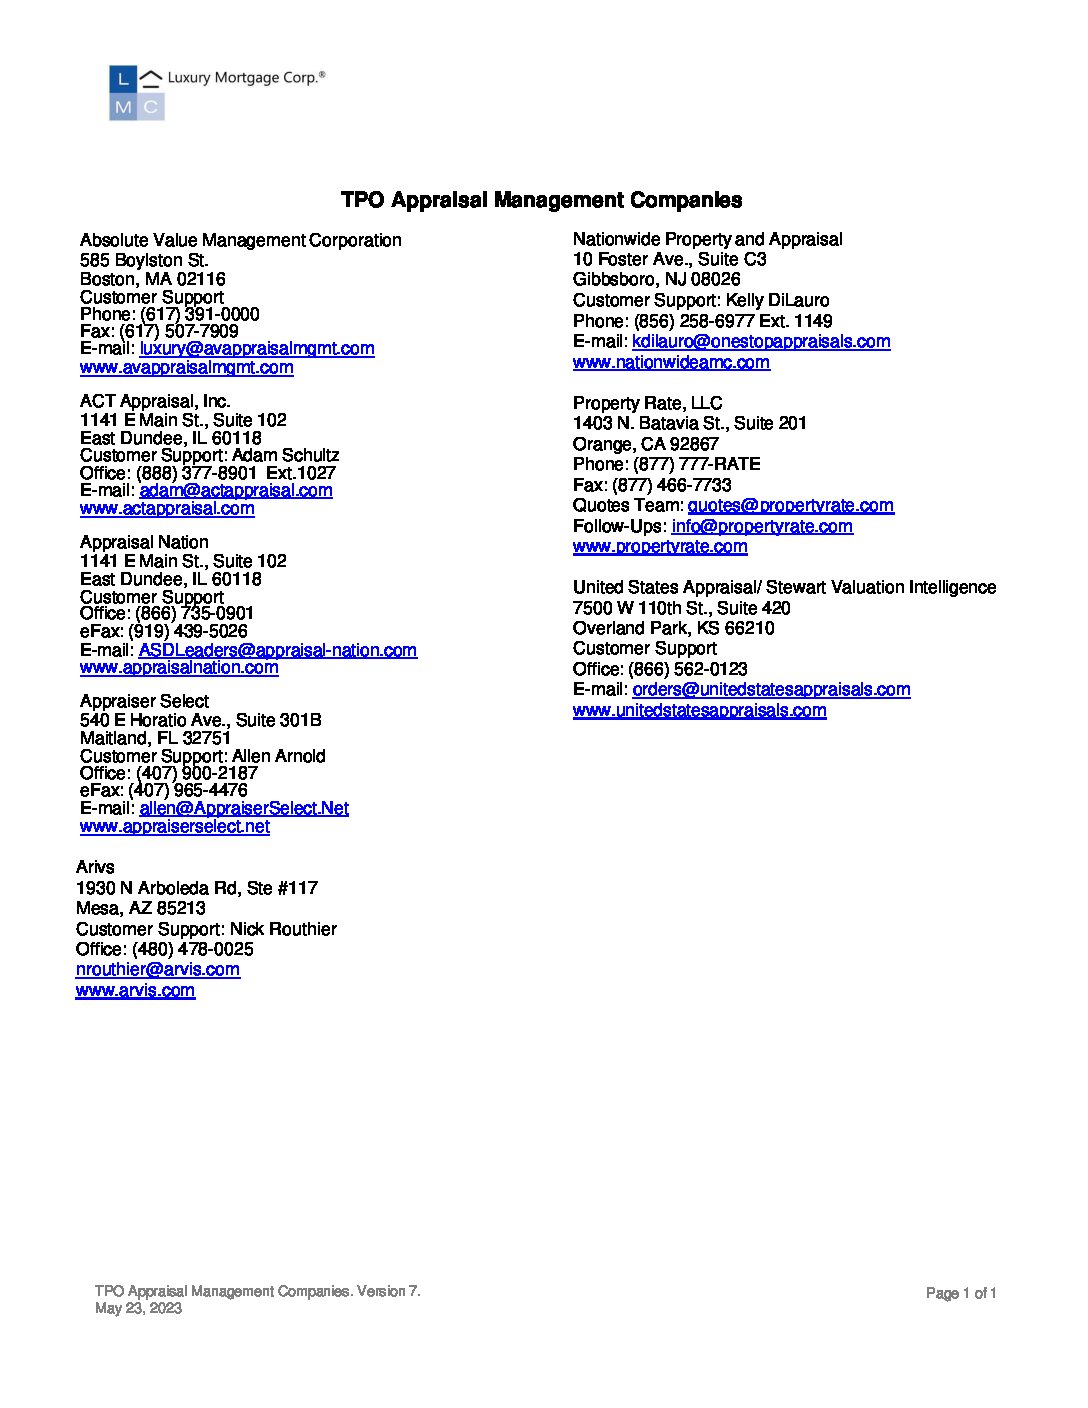 Appraisal Management Companies V.7